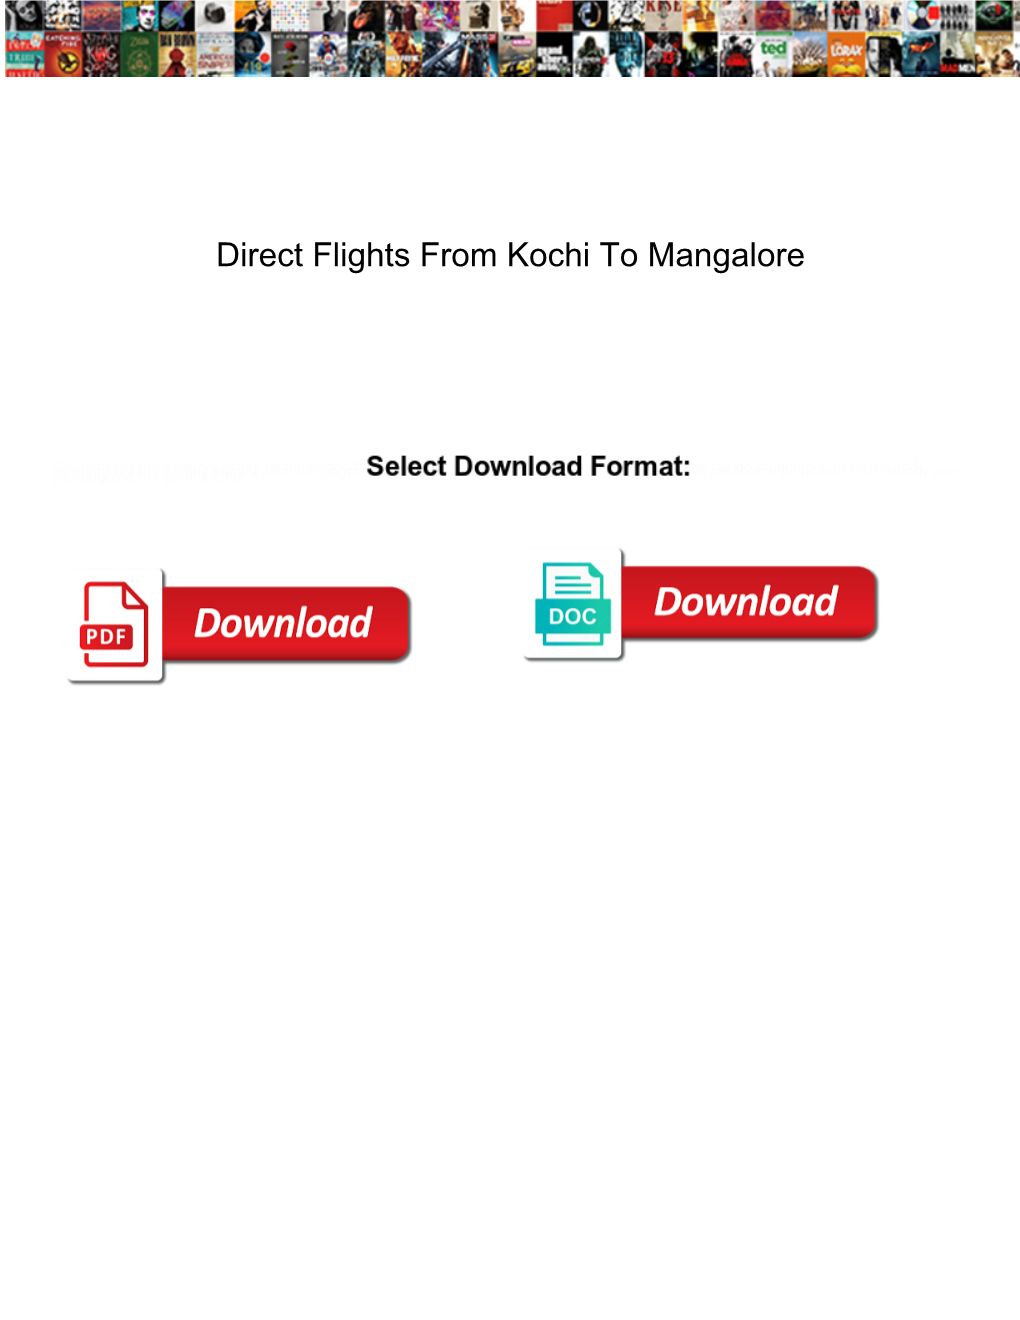 Direct Flights from Kochi to Mangalore